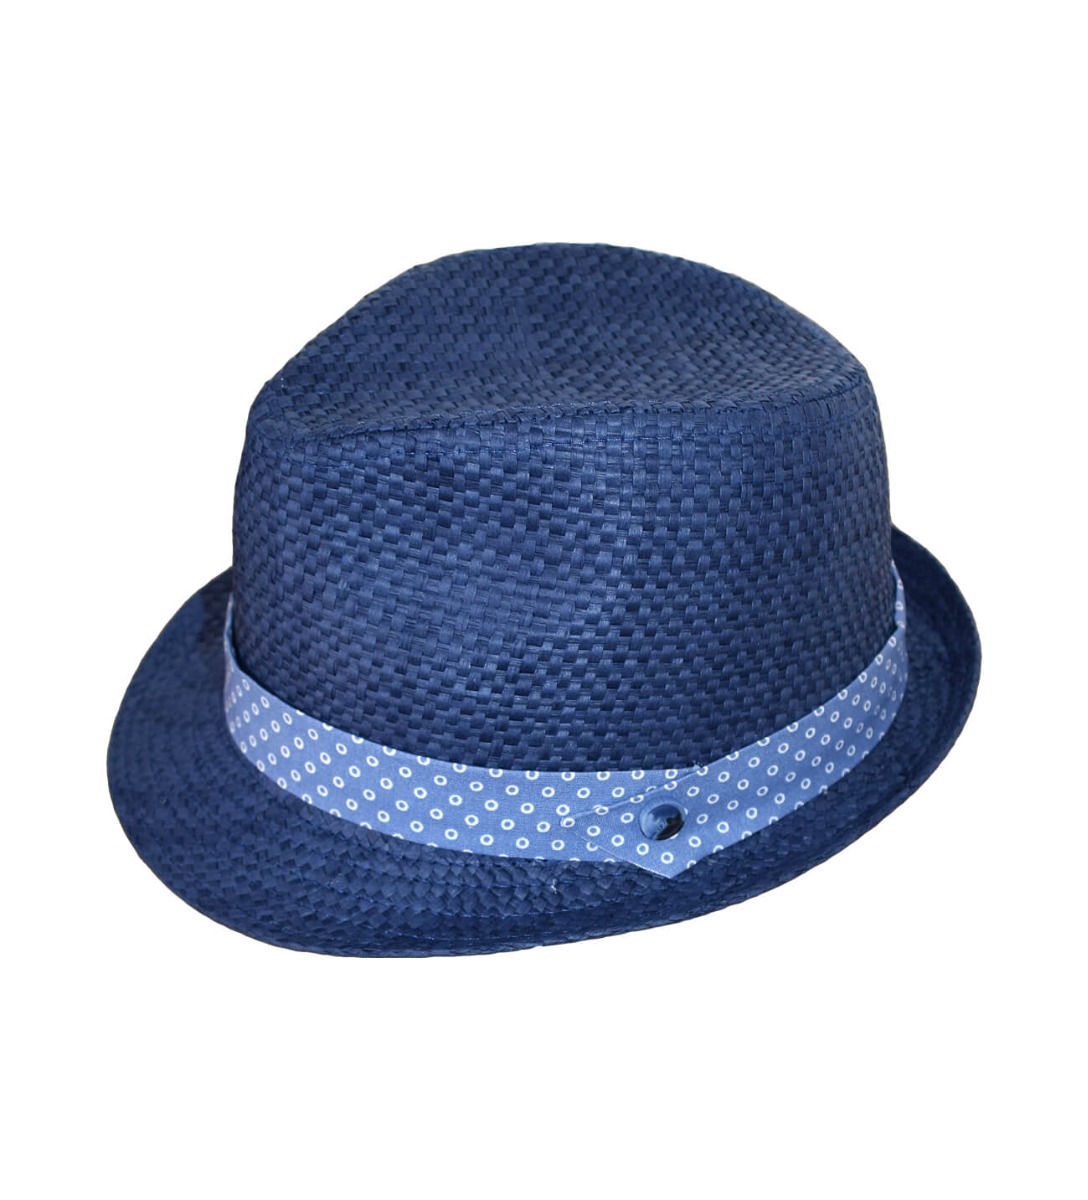 NstNastasia Βαπτιστικό Ψάθινο Μπλε Καπέλο Σιέλ Πουά Τρέσα Κουμπί 4035